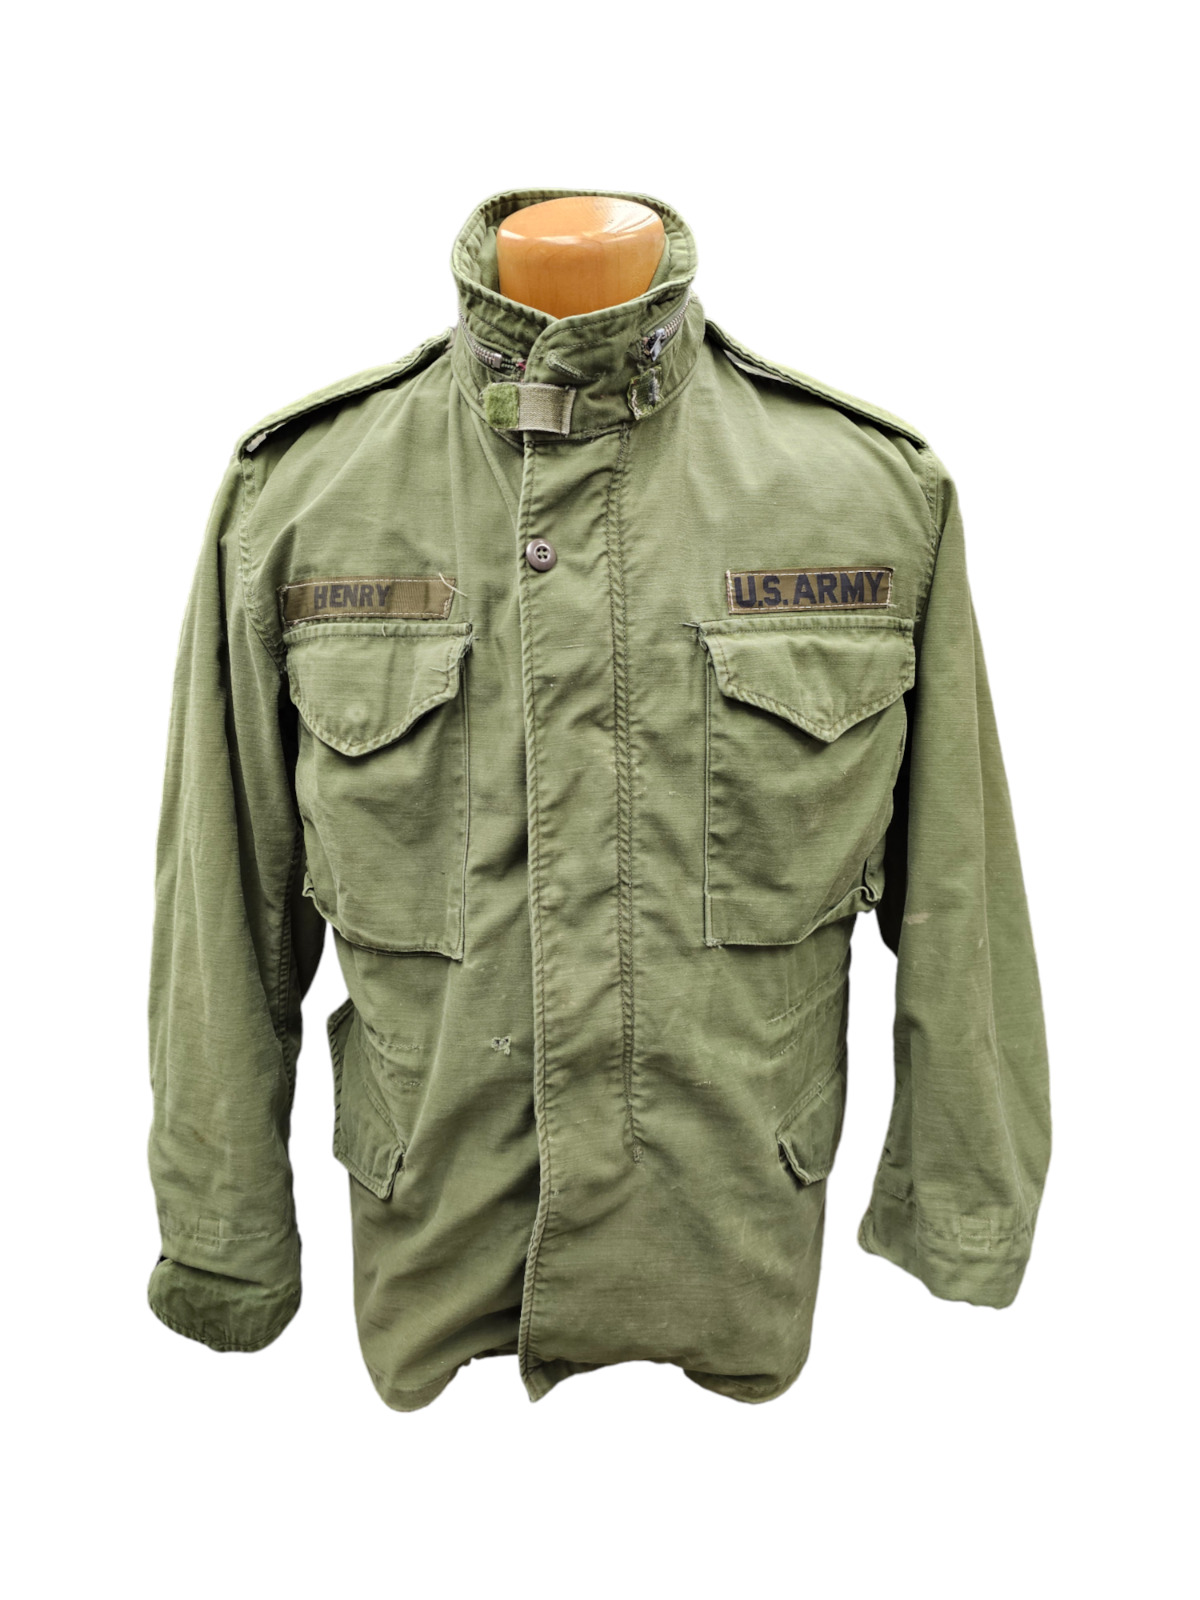 Vintage U.S. Armed Forces Alpha Industries M65 Field Jacket - Medium